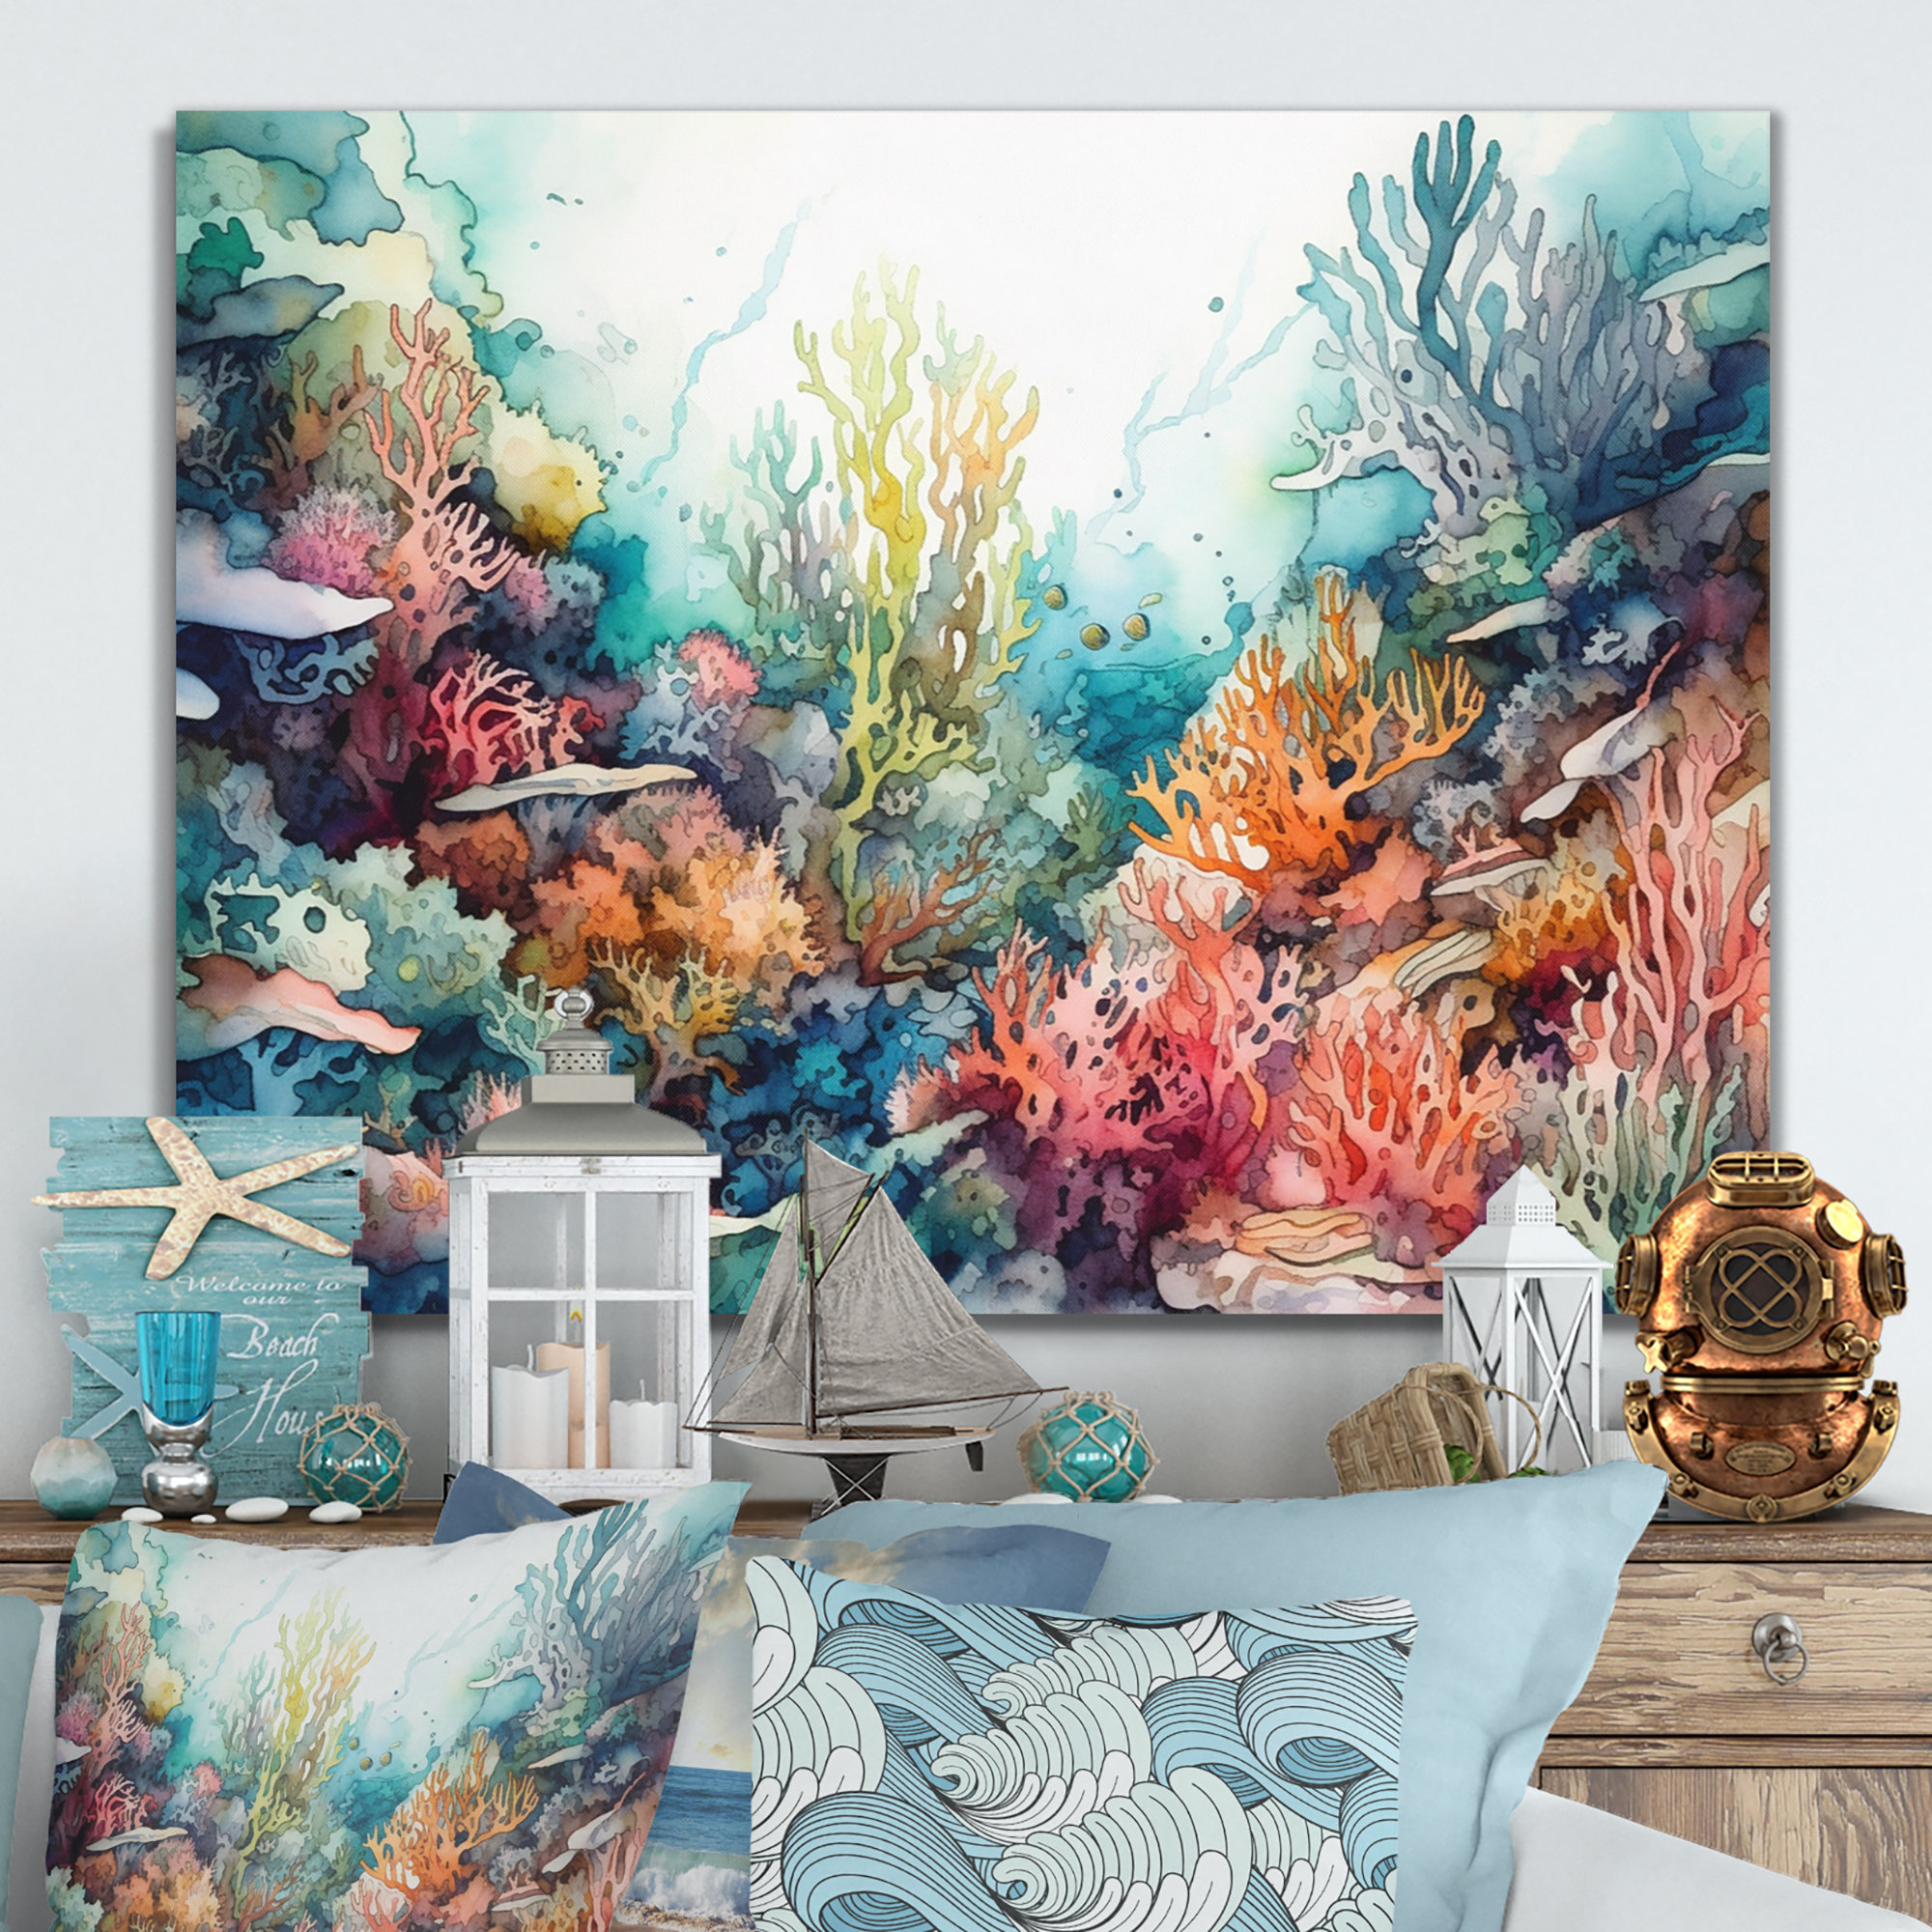 Coral Reef Throw Pillow Cover, Coastal Print